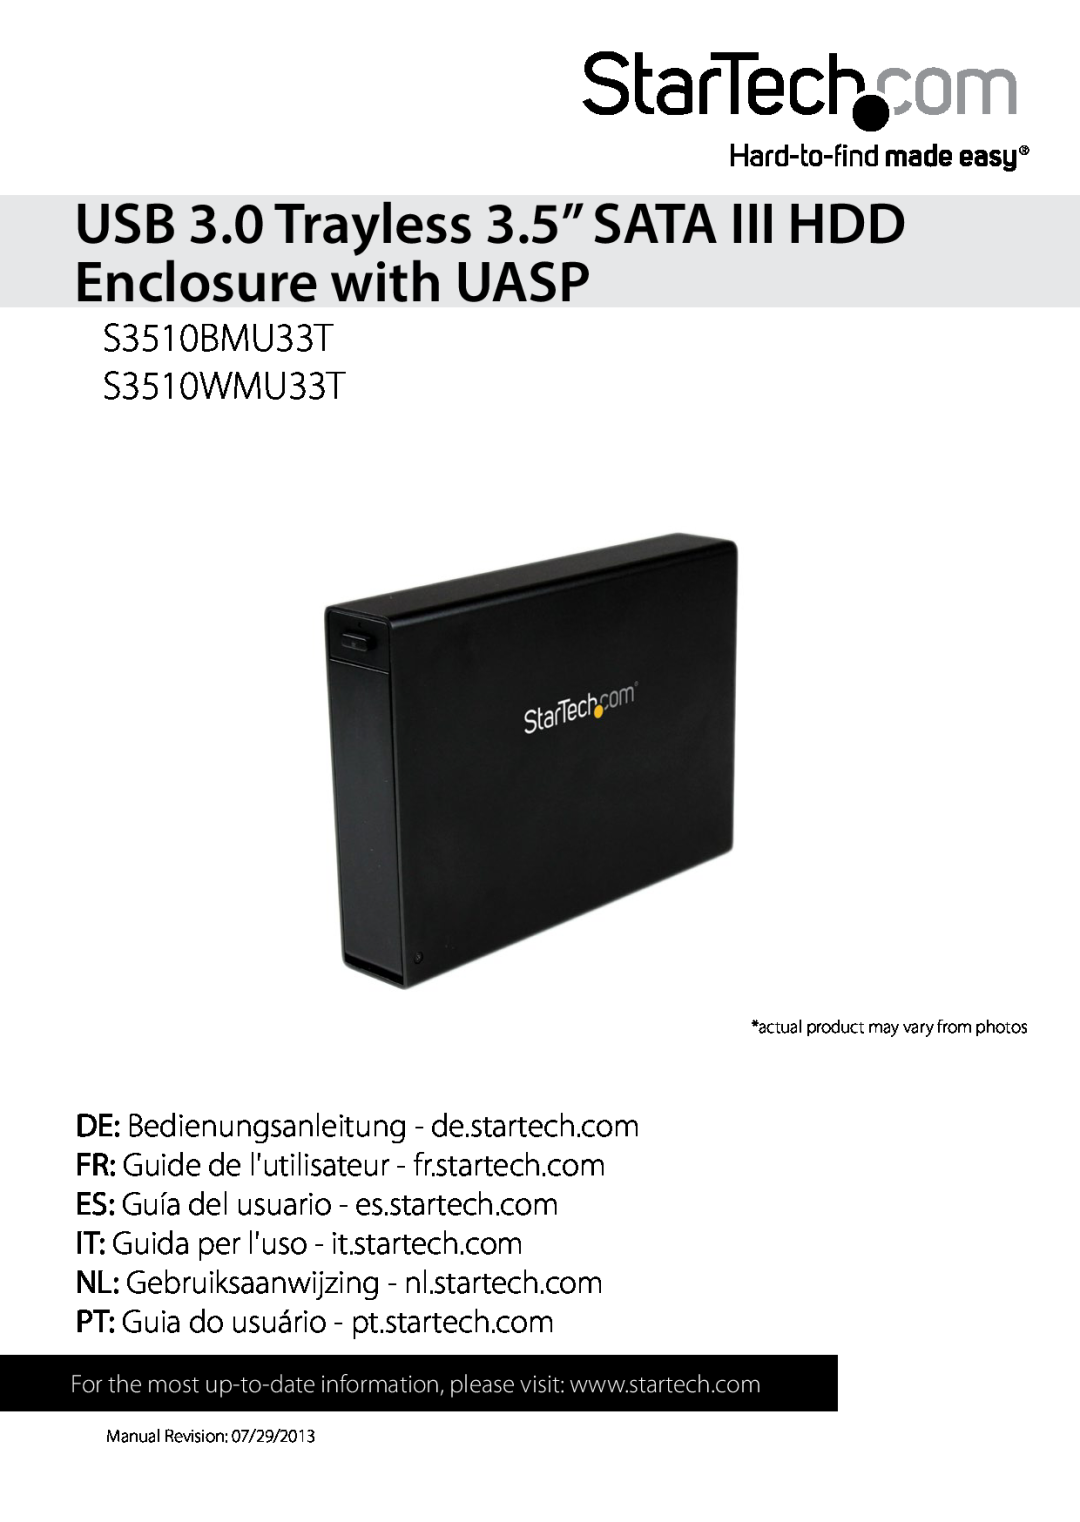 StarTech.com manual USB 3.0 Trayless 3.5” SATA III HDD Enclosure with UASP, S3510BMU33T S3510WMU33T 